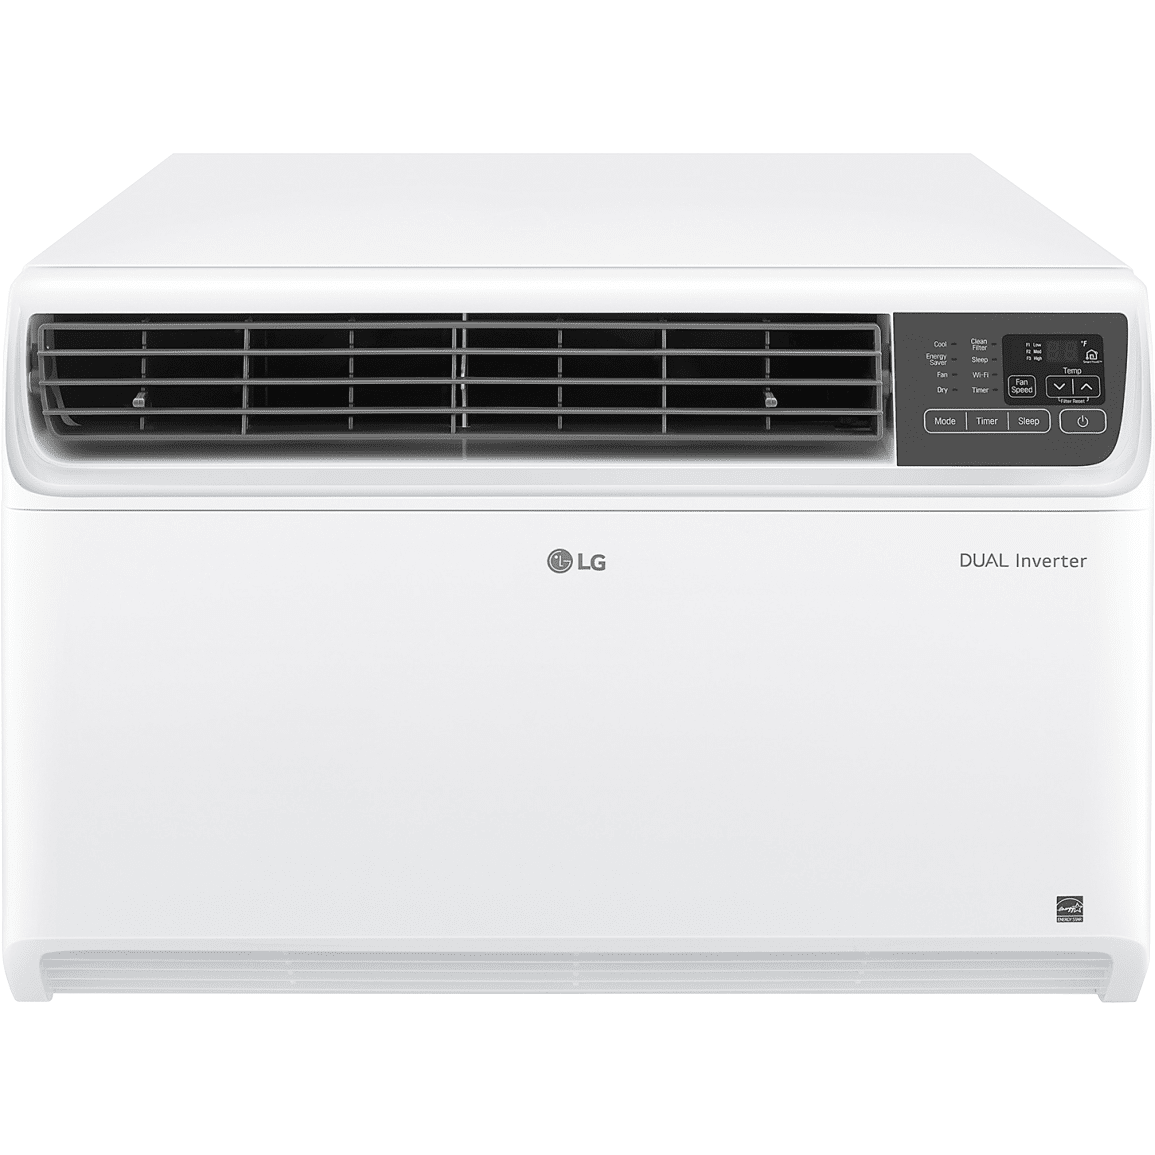 LG 18,000 BTU Dual Inverter Smart Window Air Conditioner